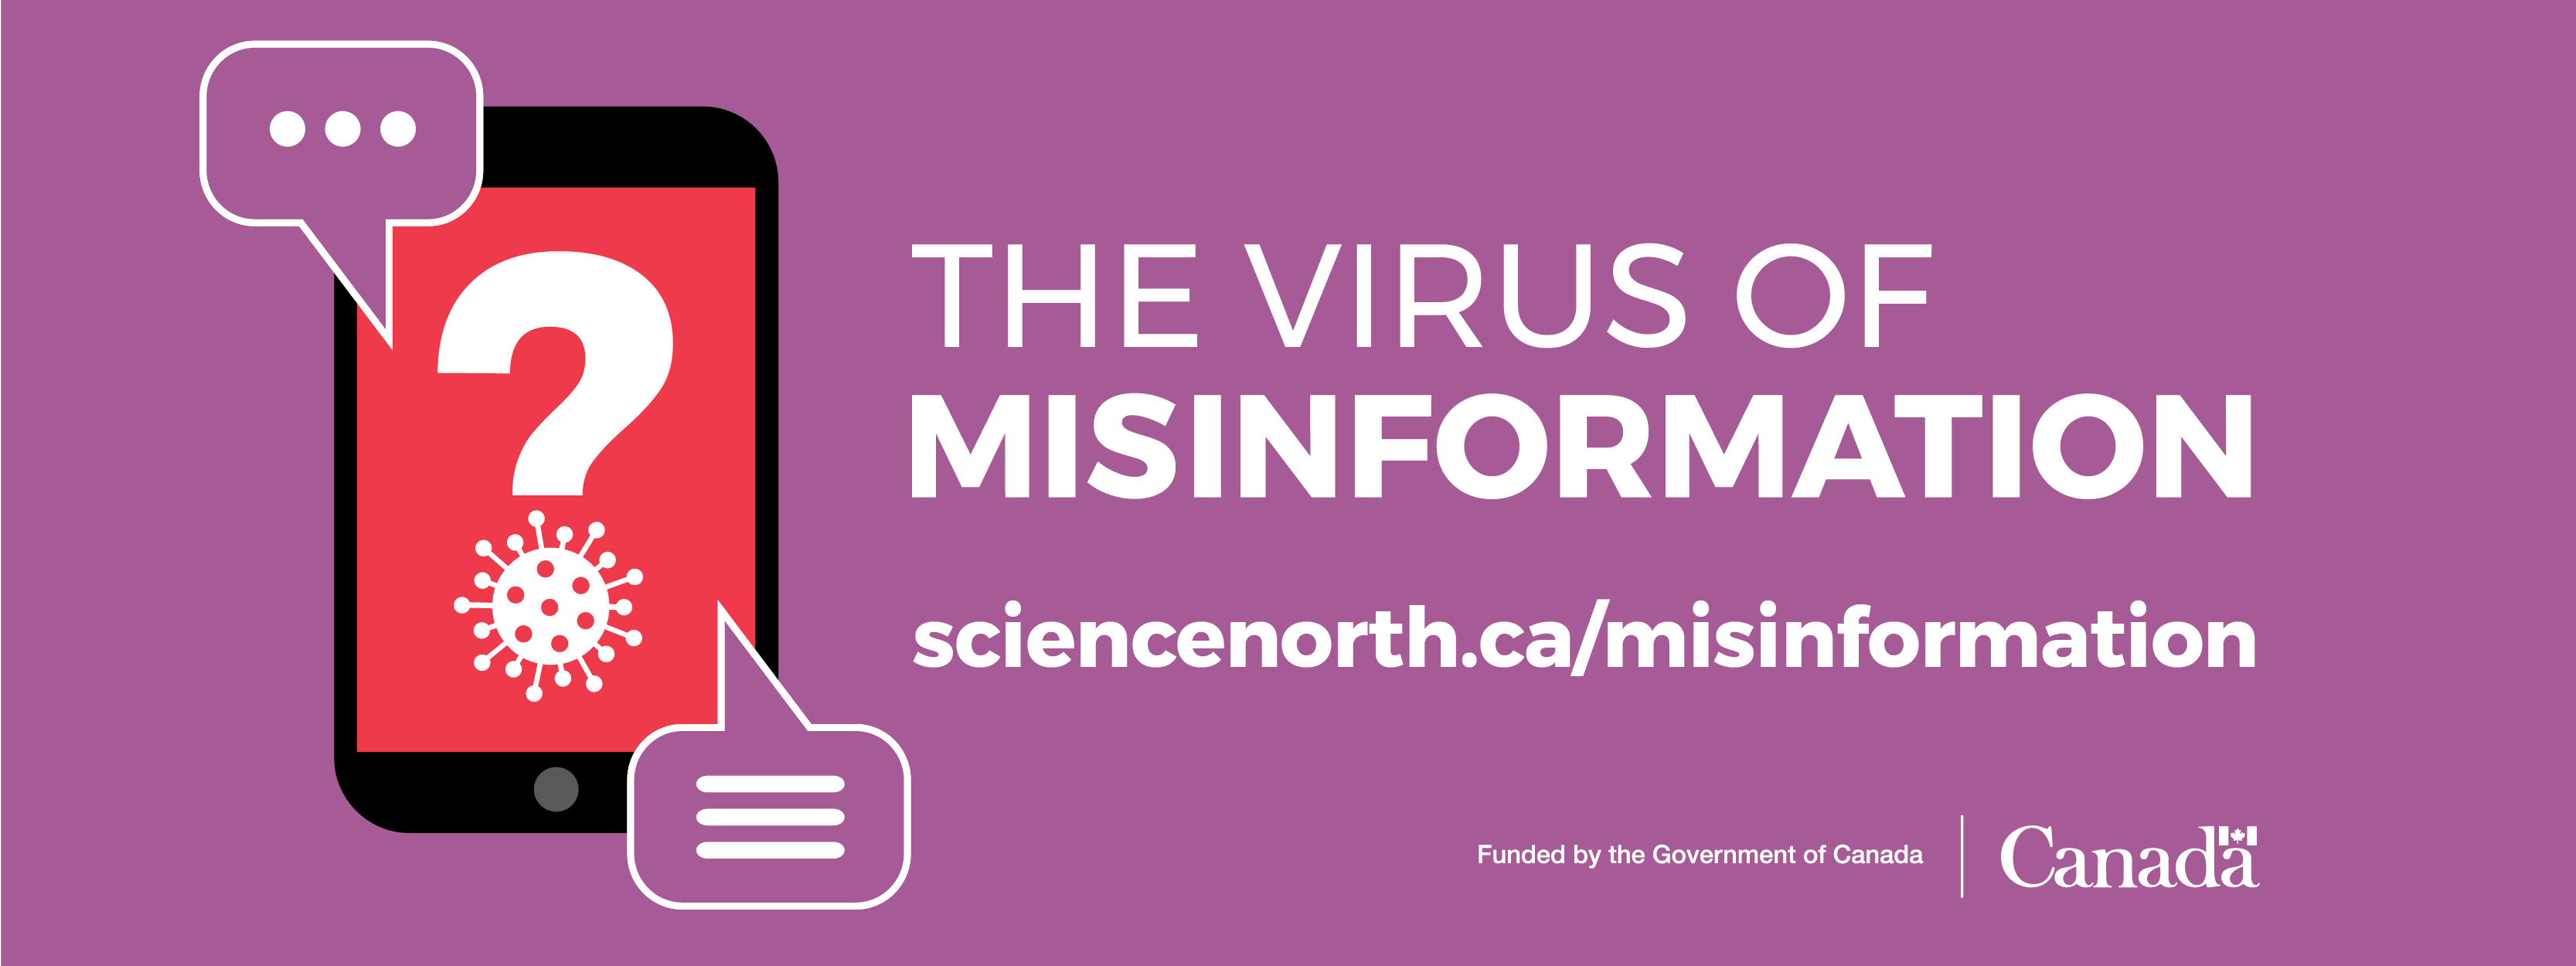 the virus of misinformation